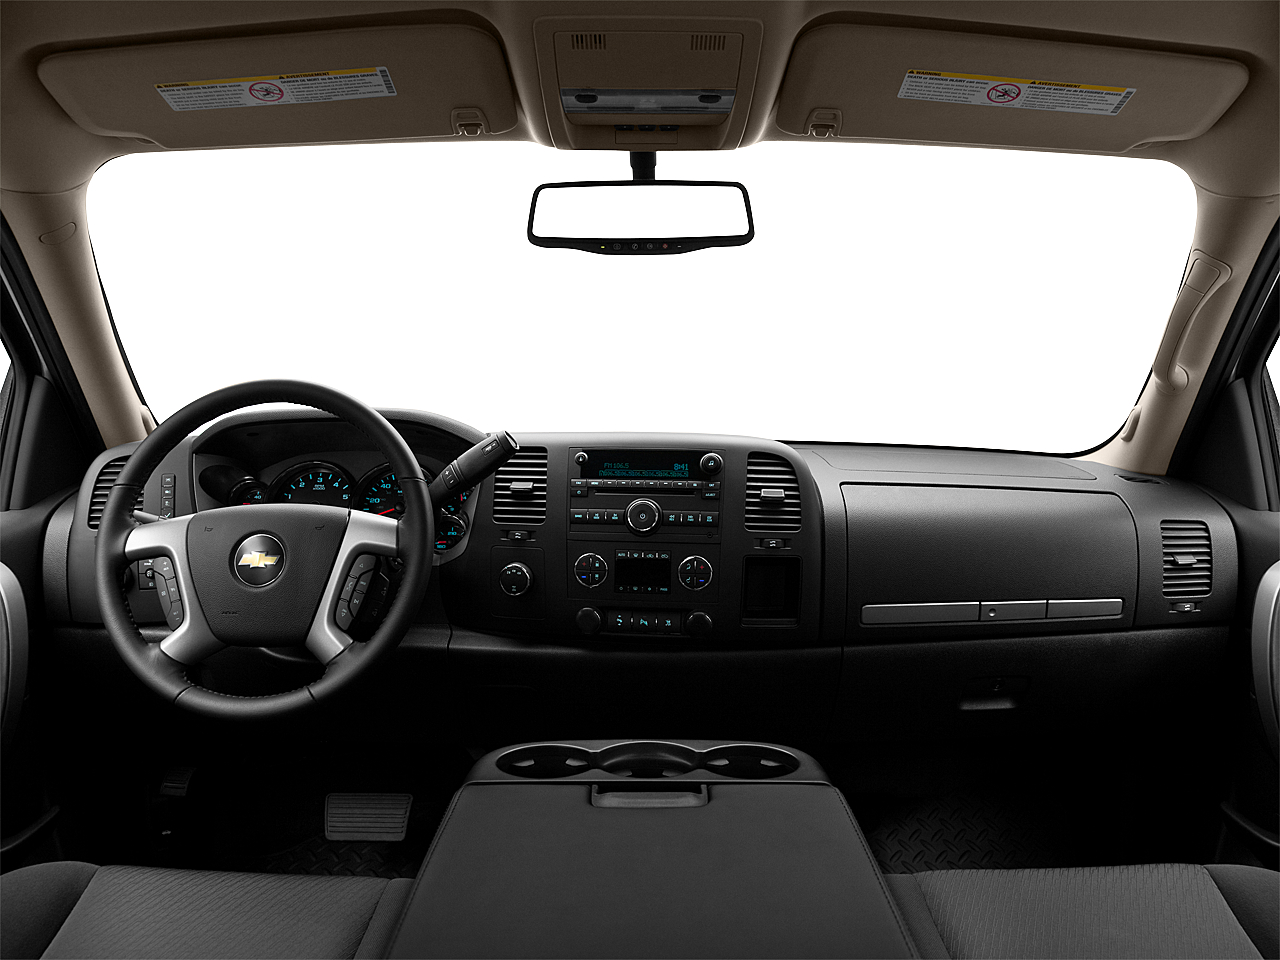 2011 Chevrolet Silverado 2500HD 4x4 LT 4dr Crew Cab SB - Research -  GrooveCar